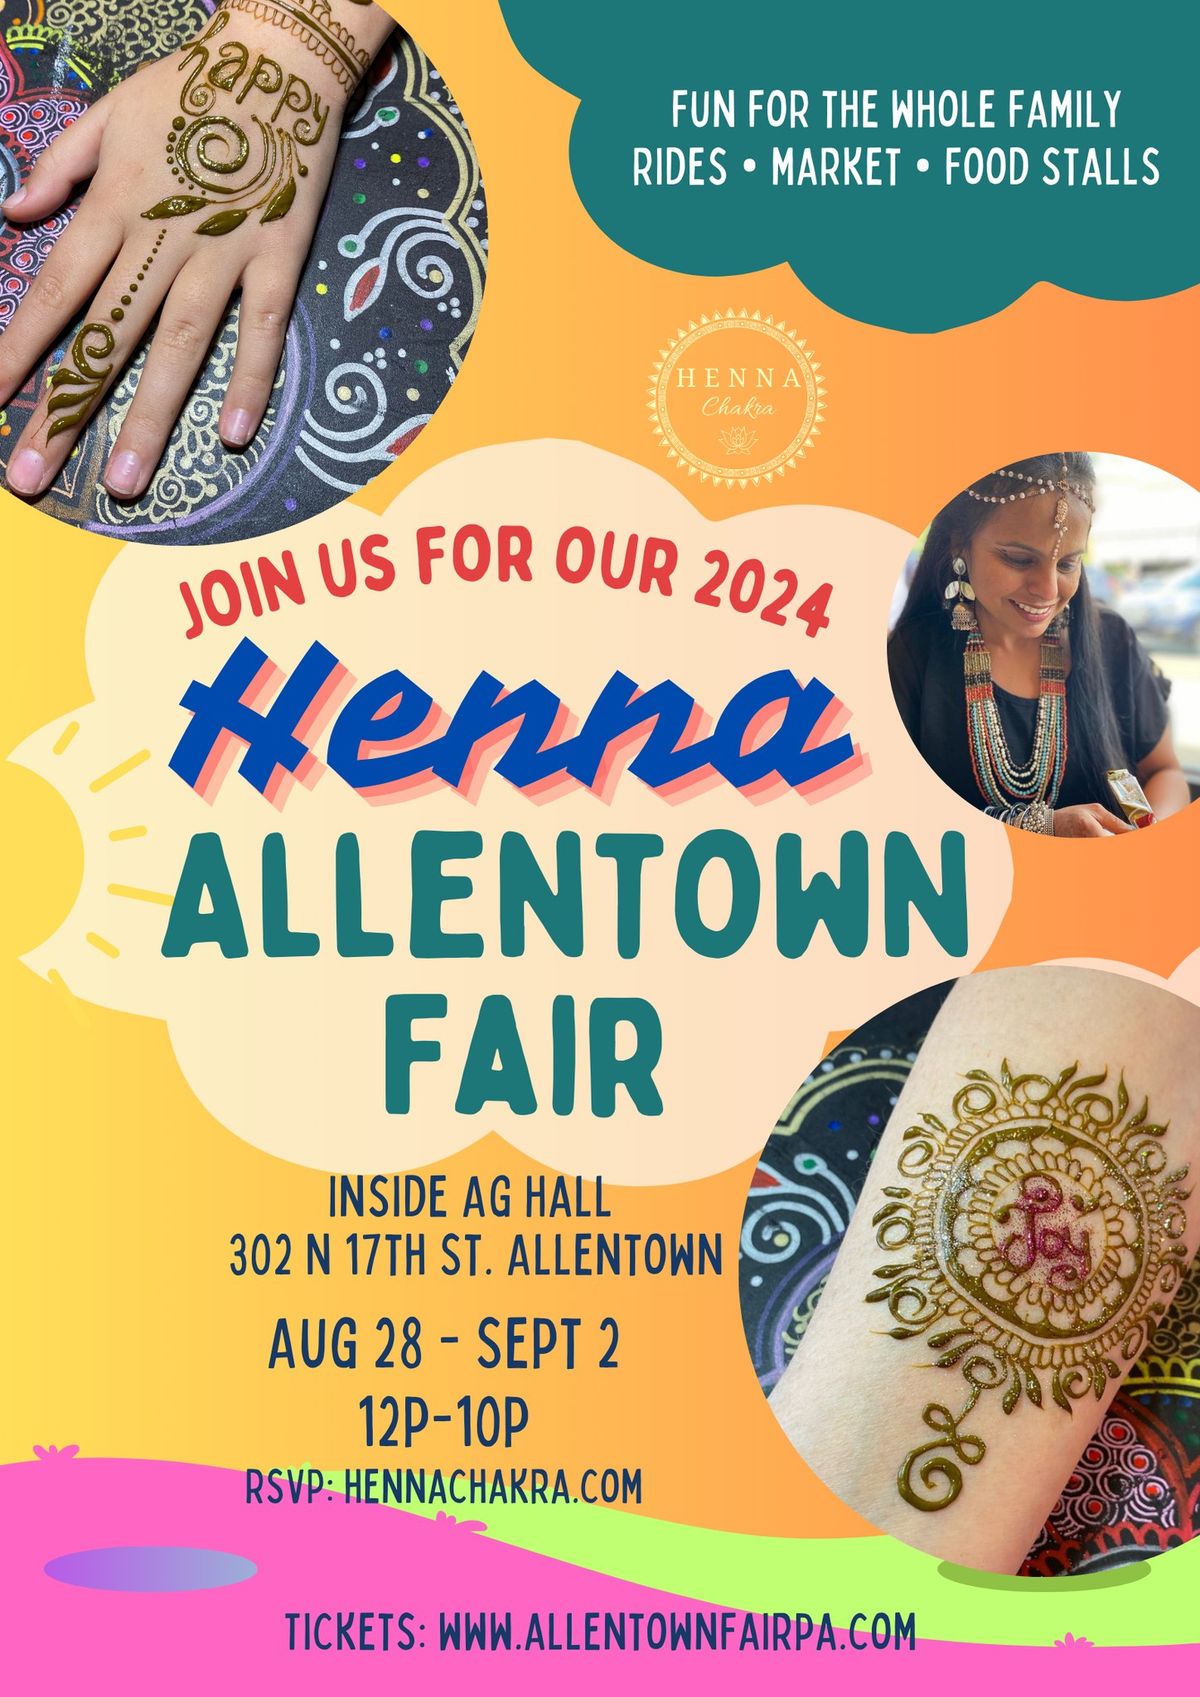 HENNA at The Allentown Fair